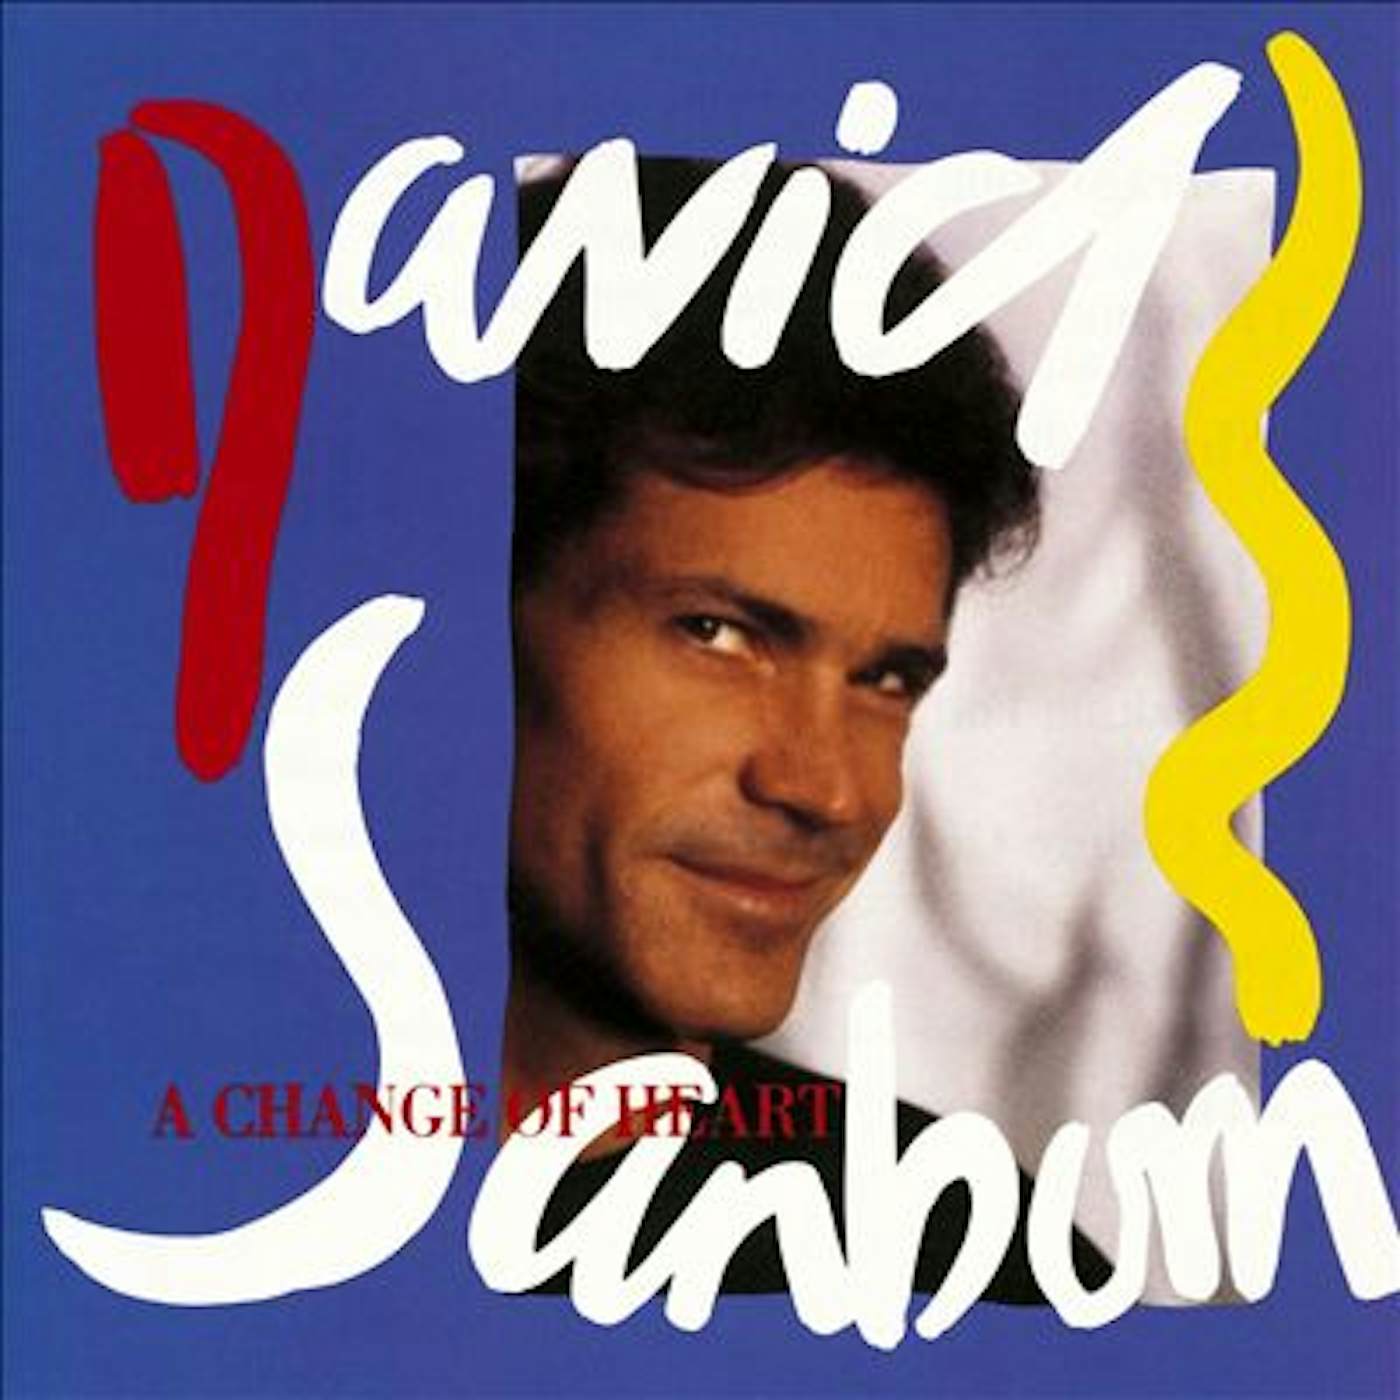 David Sanborn CHANGE OF HEART Vinyl Record